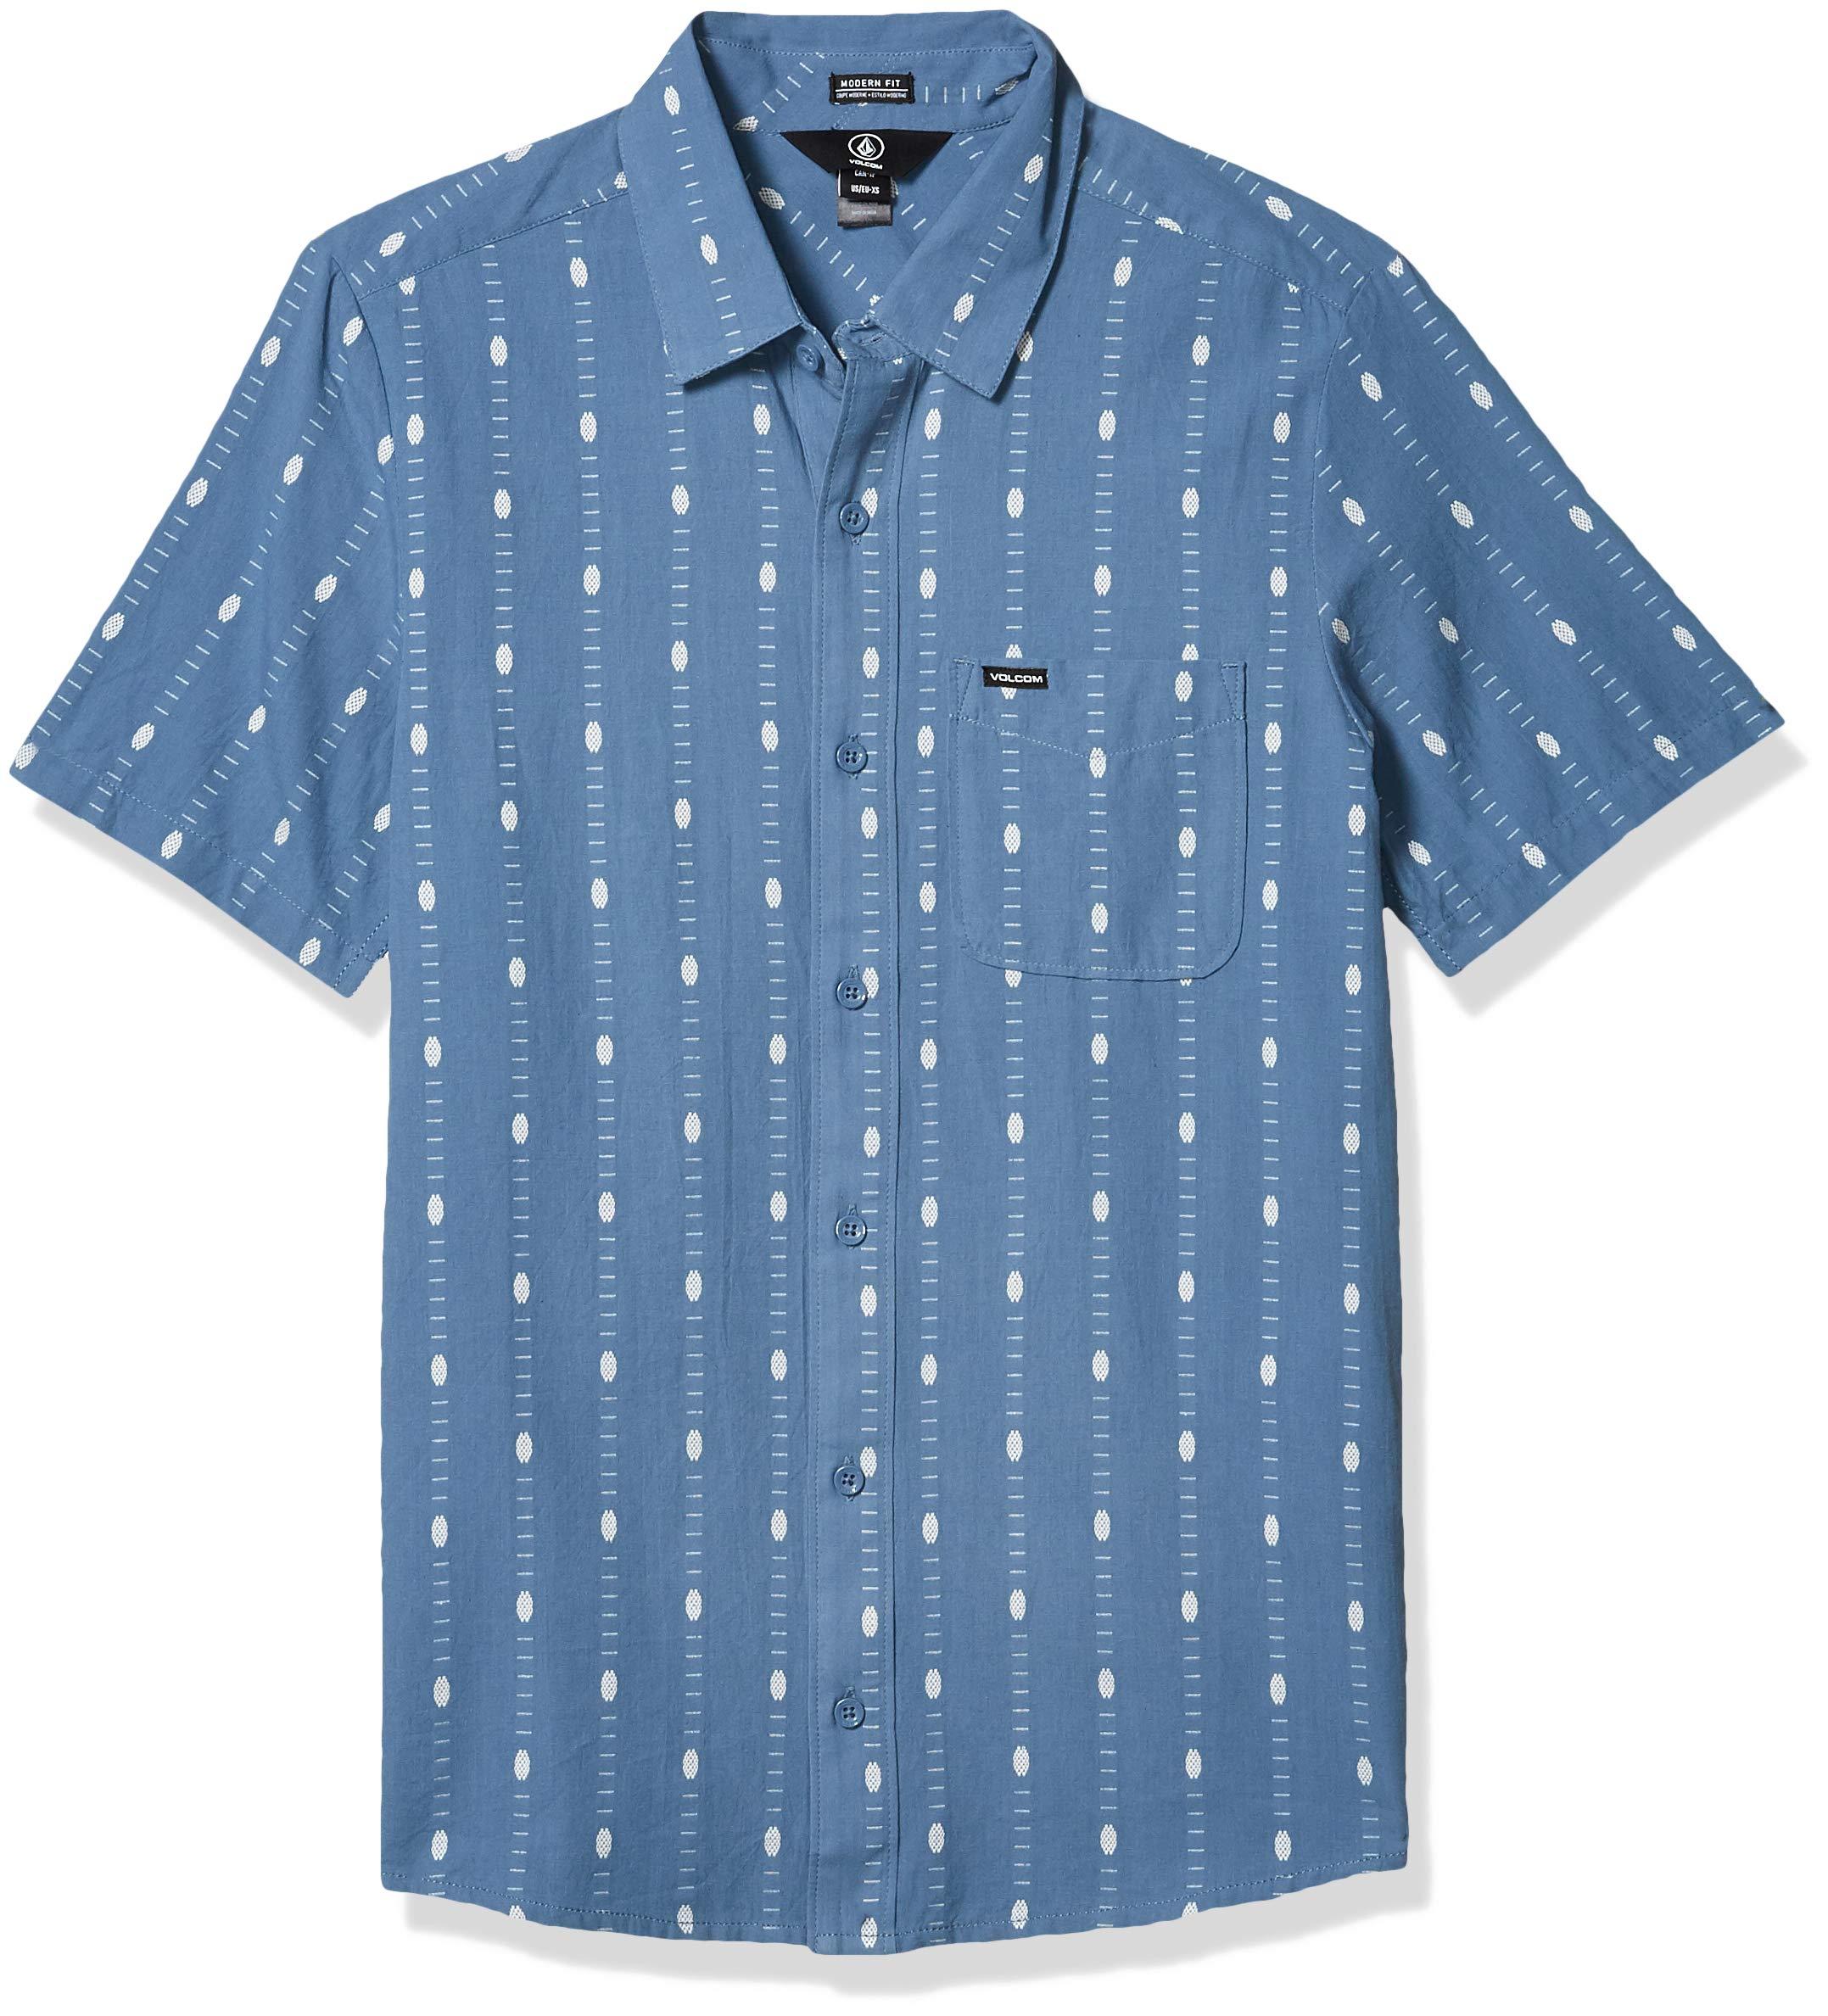 Volcom Short Sleeve Button Down Shirt in Blue Rinse (Blue) for Men - Lyst